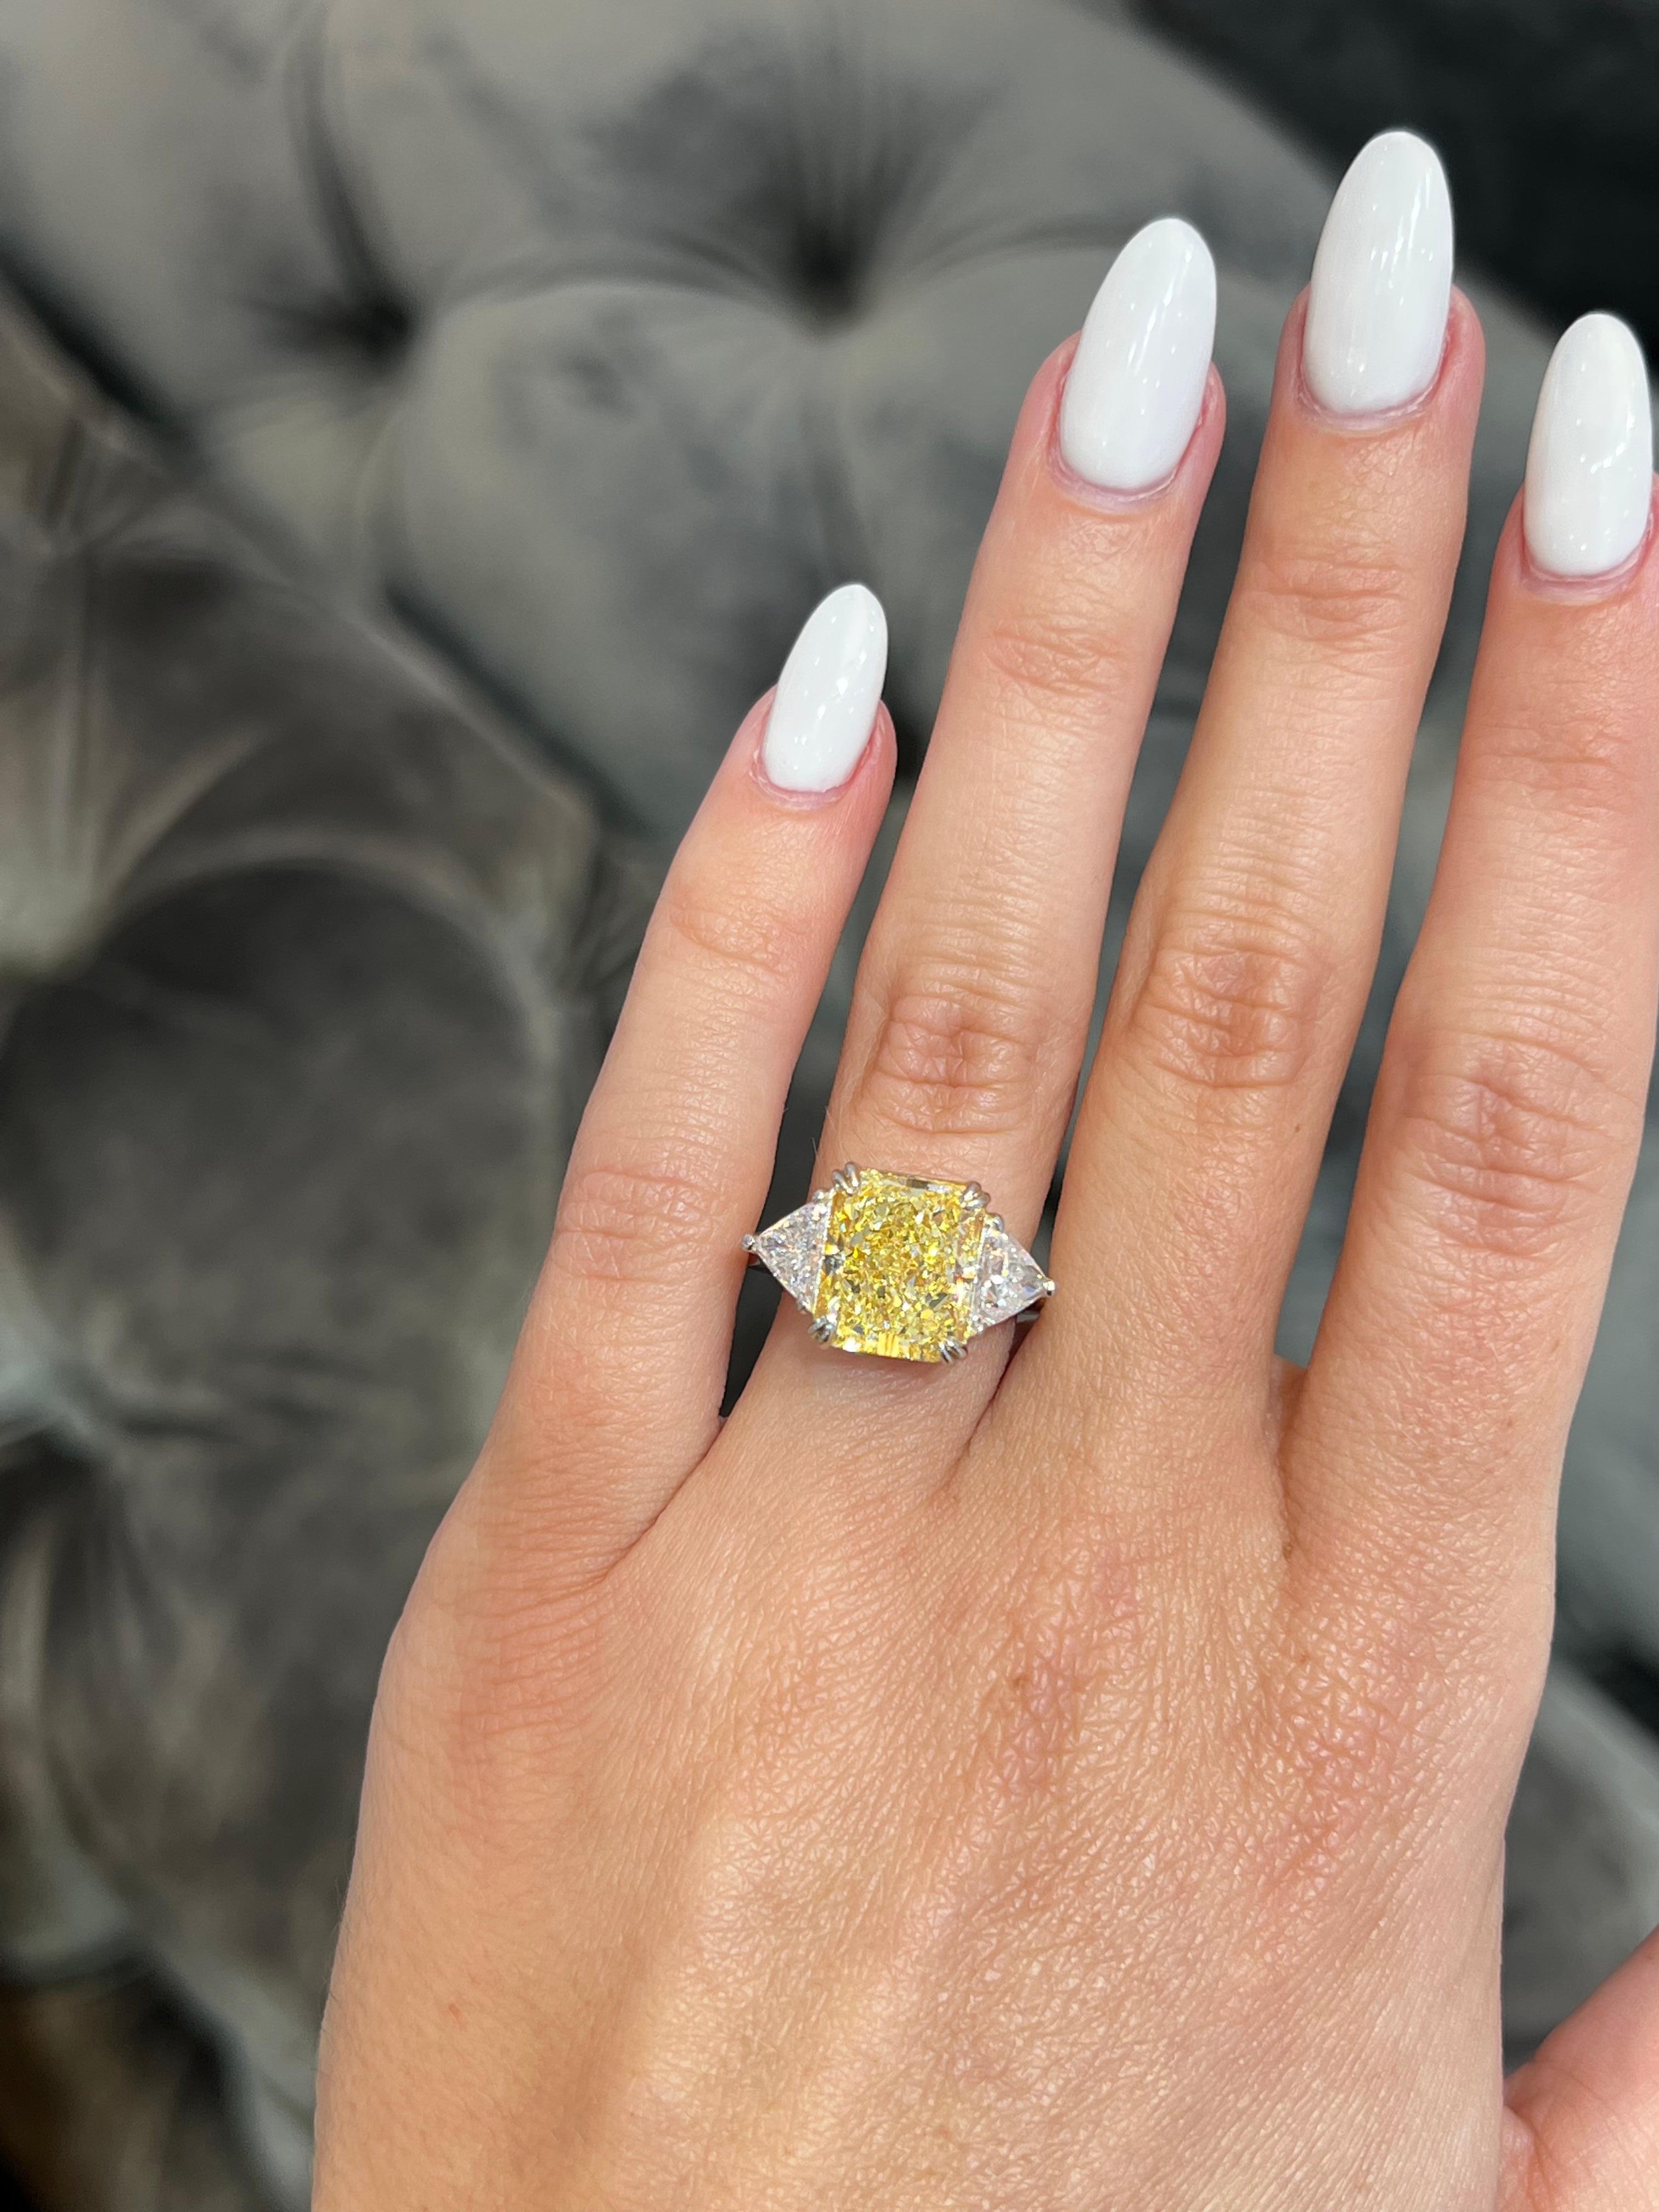 David Rosenberg 5.68 ct Fancy Light Yellow Radiant GIA Diamond Engagement Ring For Sale 3